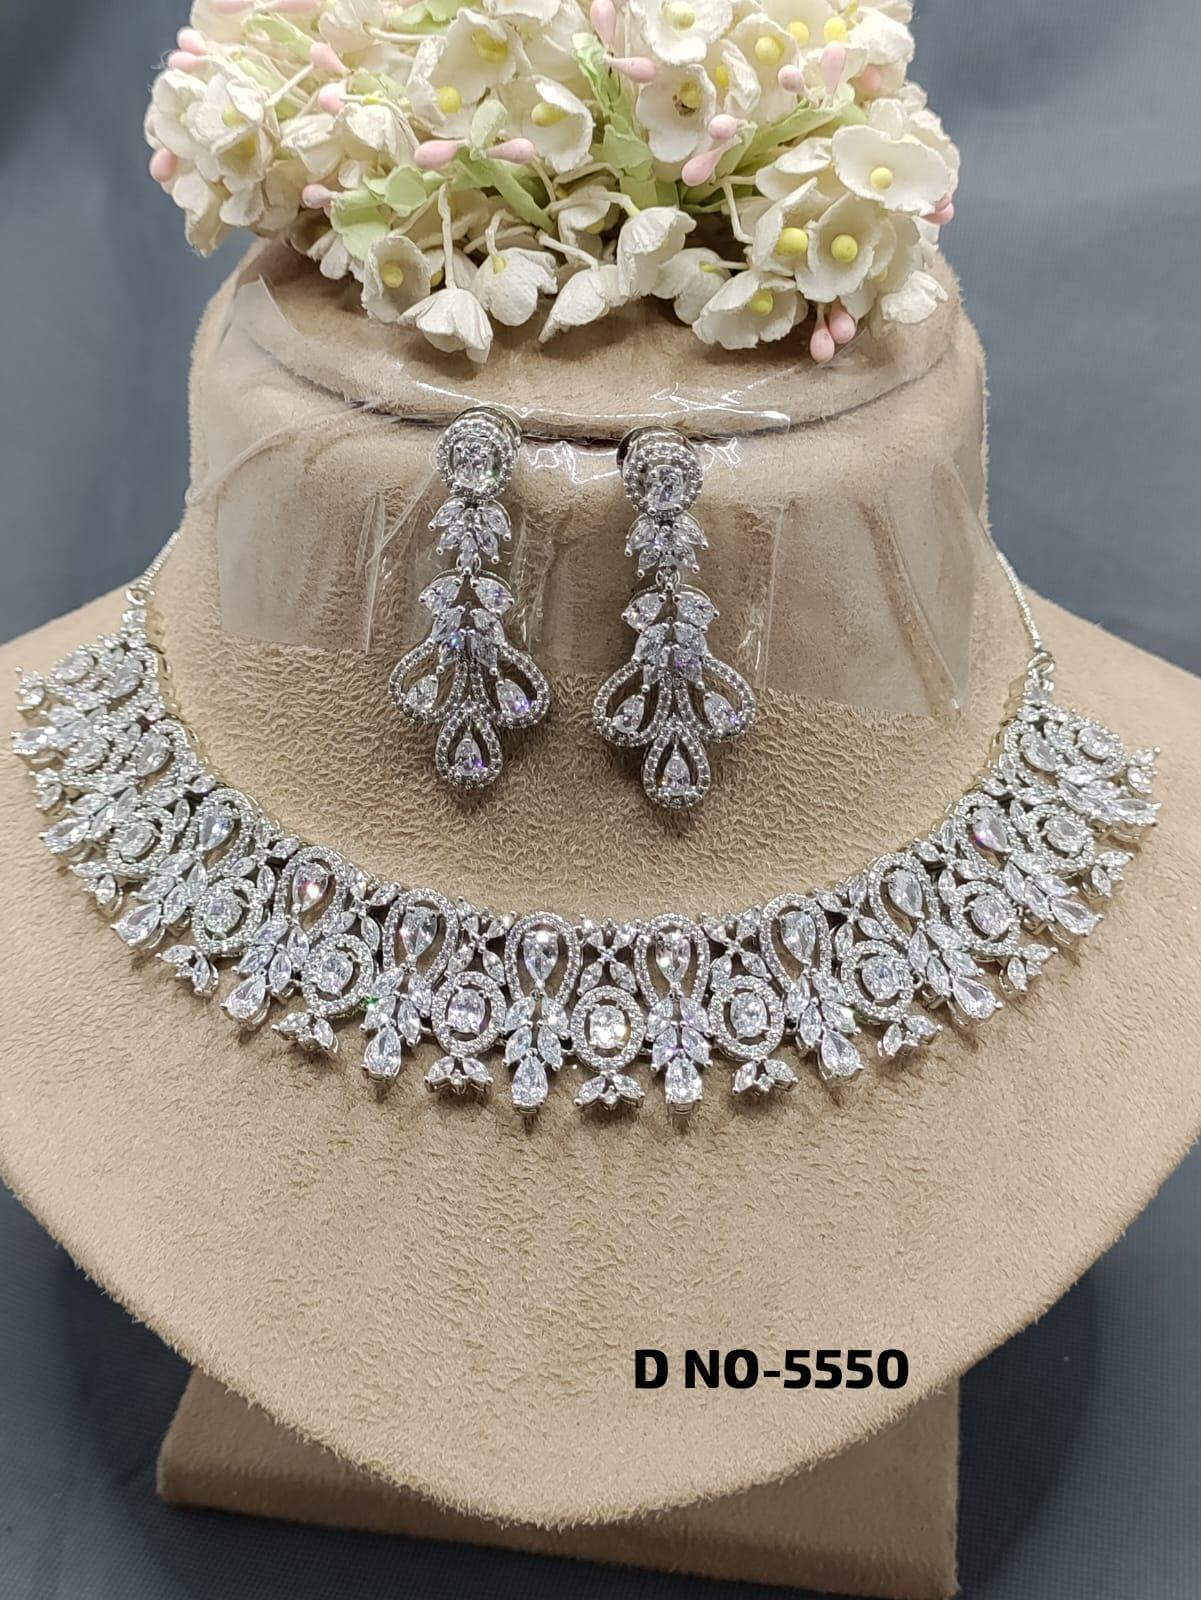 American Diamond Necklace Rodium Sku-5550 C3 - rchiecreation